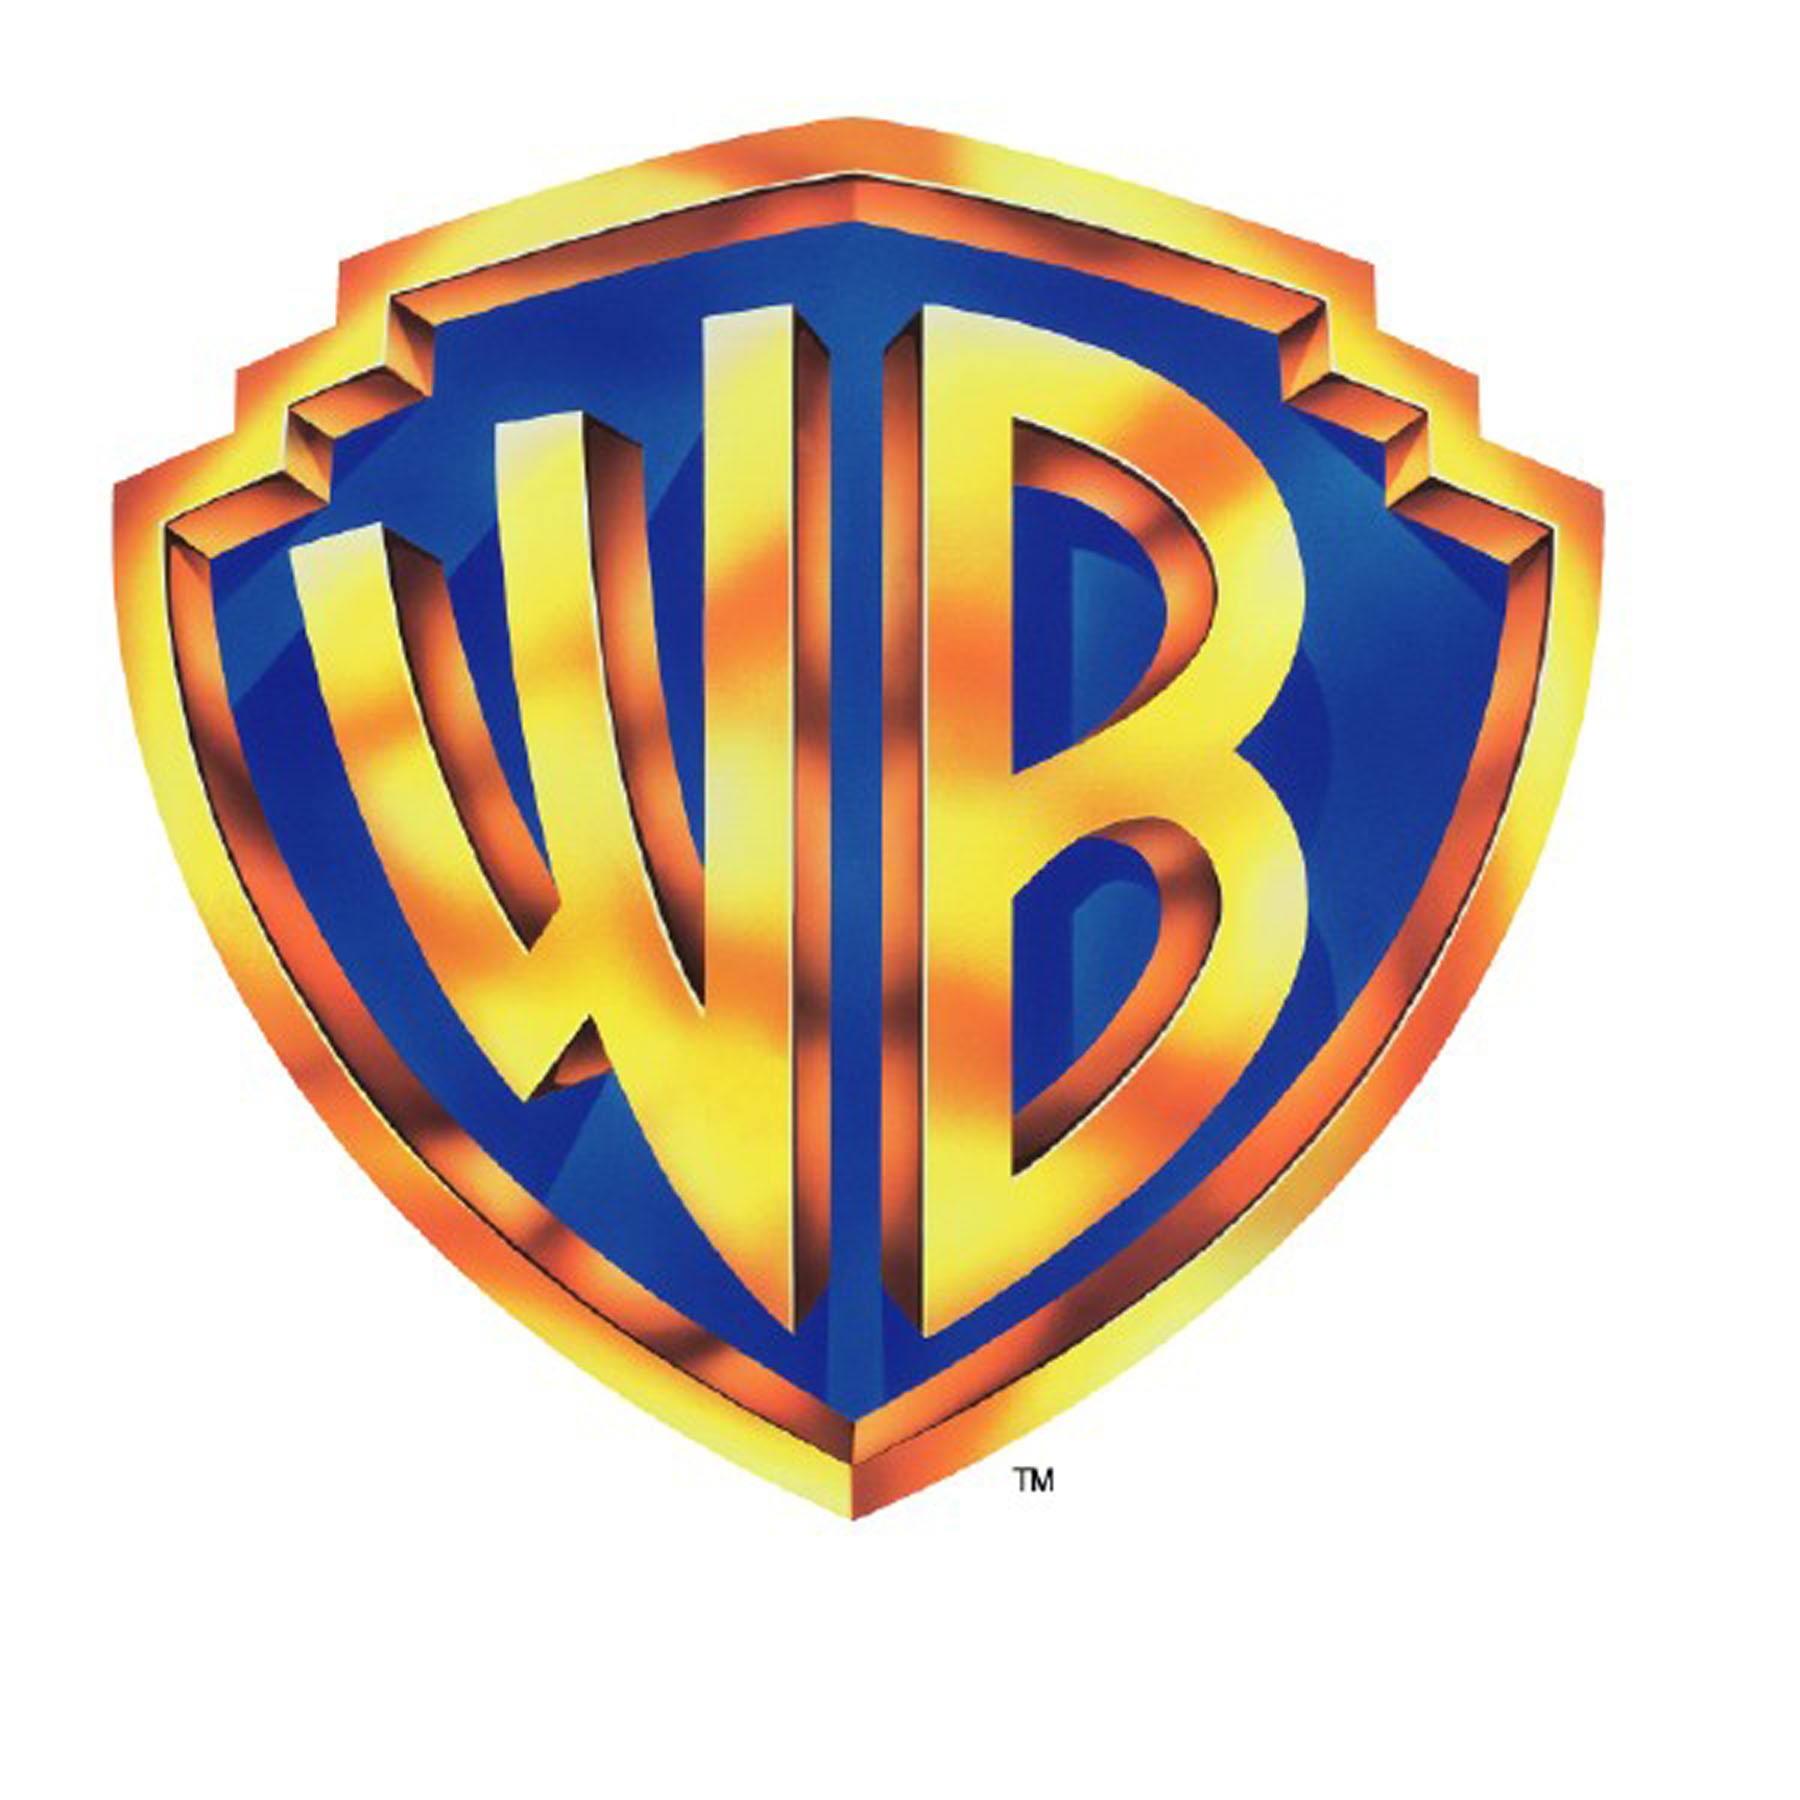 That`S Warner Bros.! [1995– ]